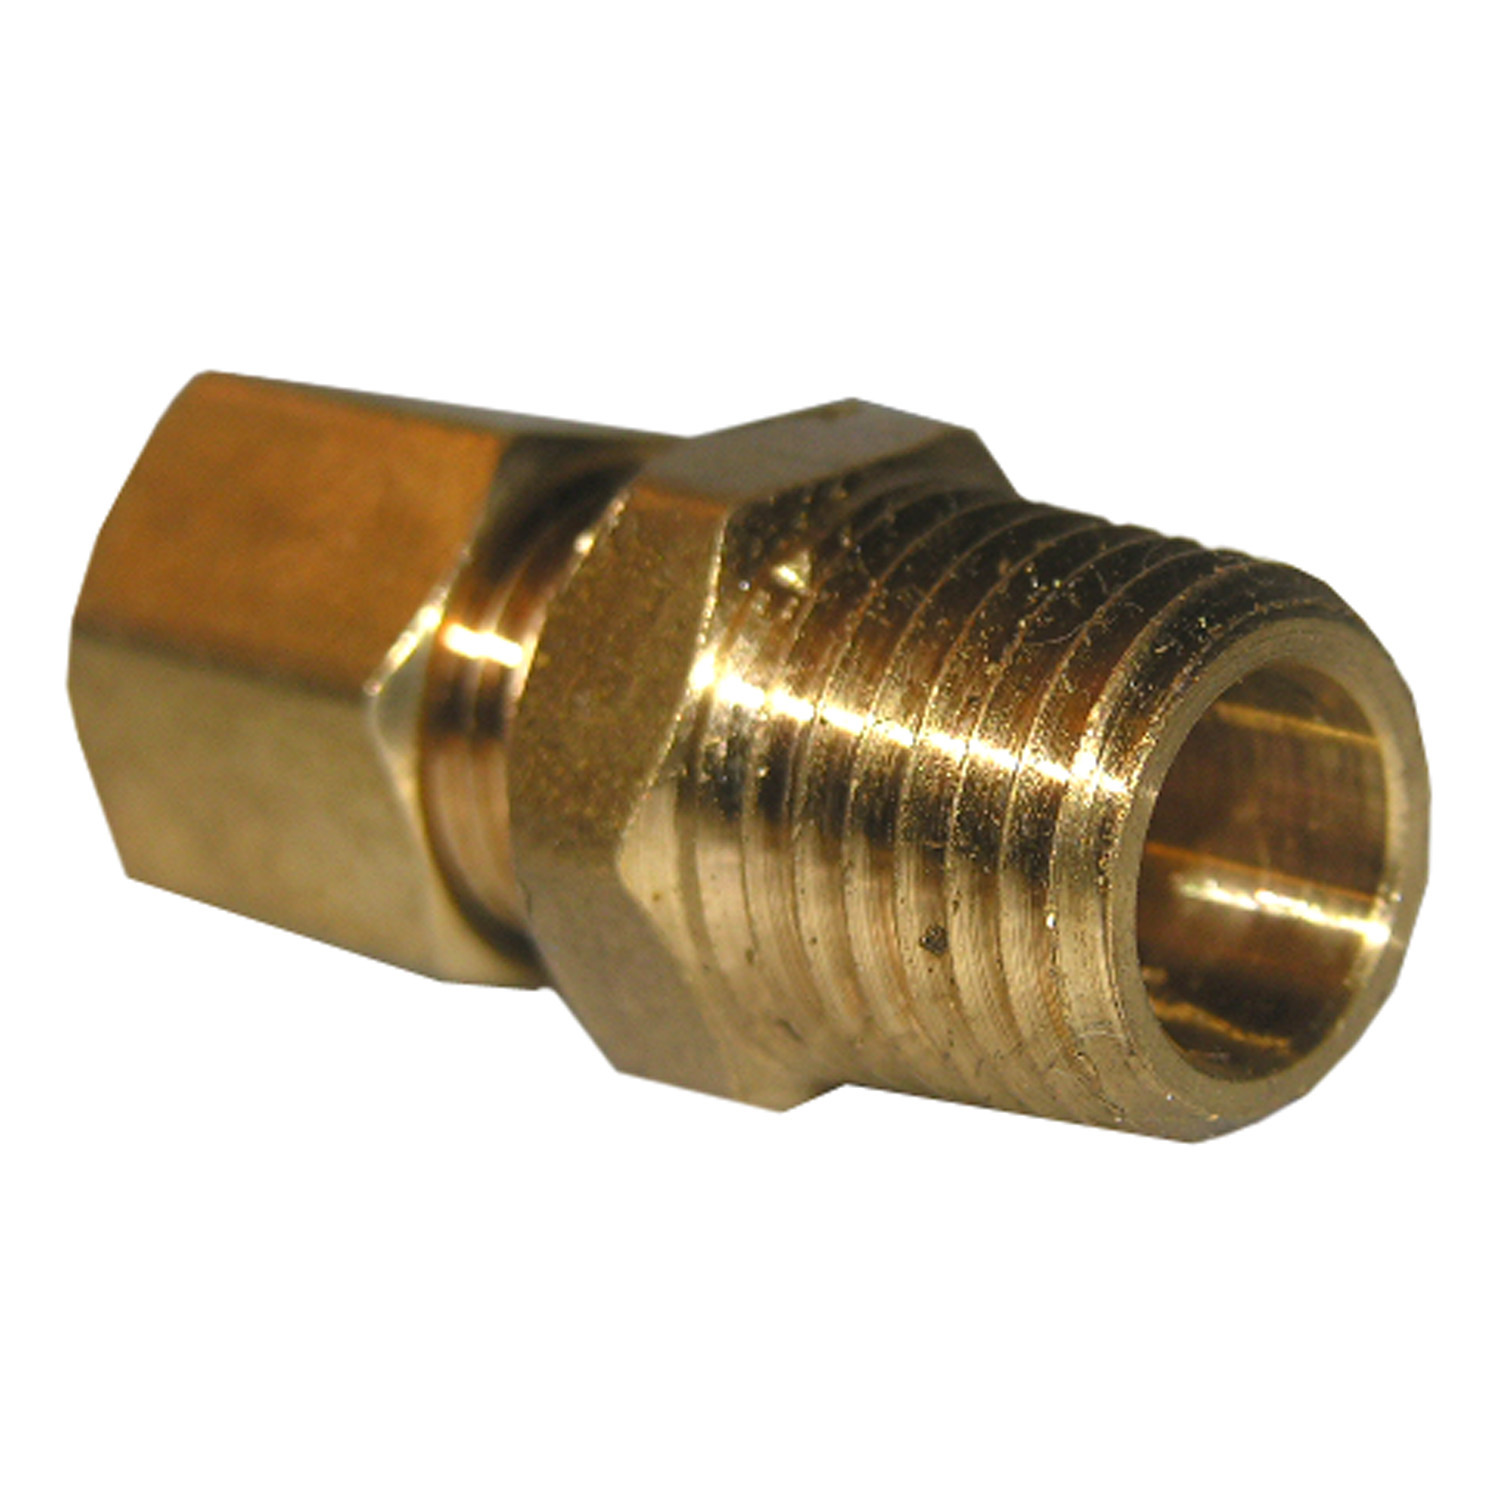 17-6801 Pipe Adapter, 1/8 in, Compression x MPT, Brass, 150 psi Pressure